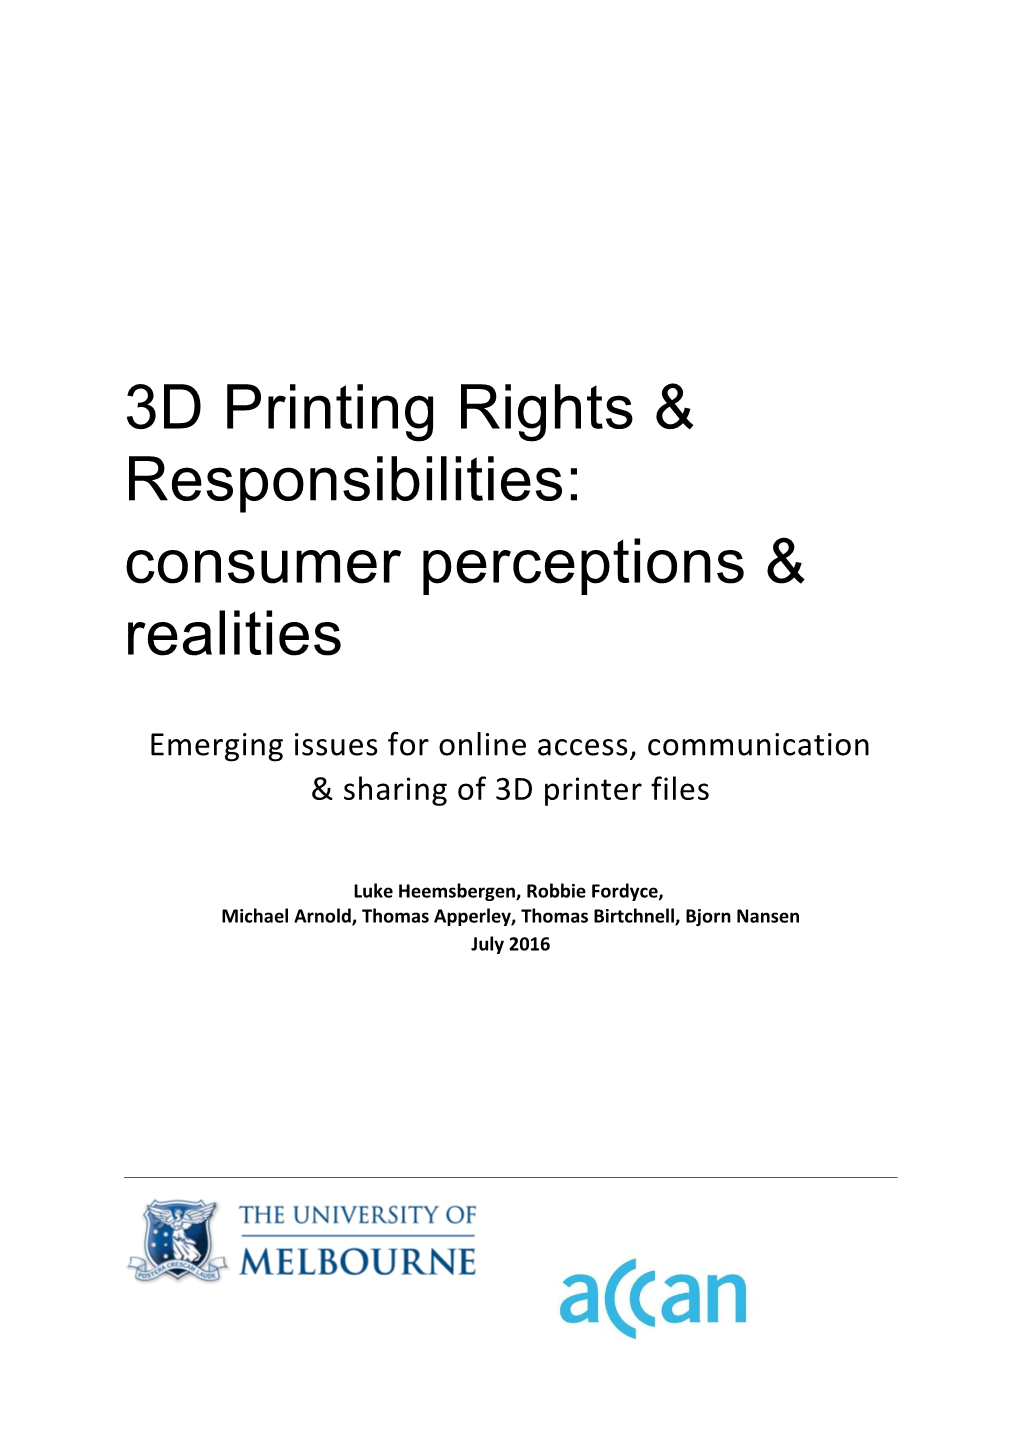 3D Printing Rights & Responsibilities: Consumer Perceptions & Realities